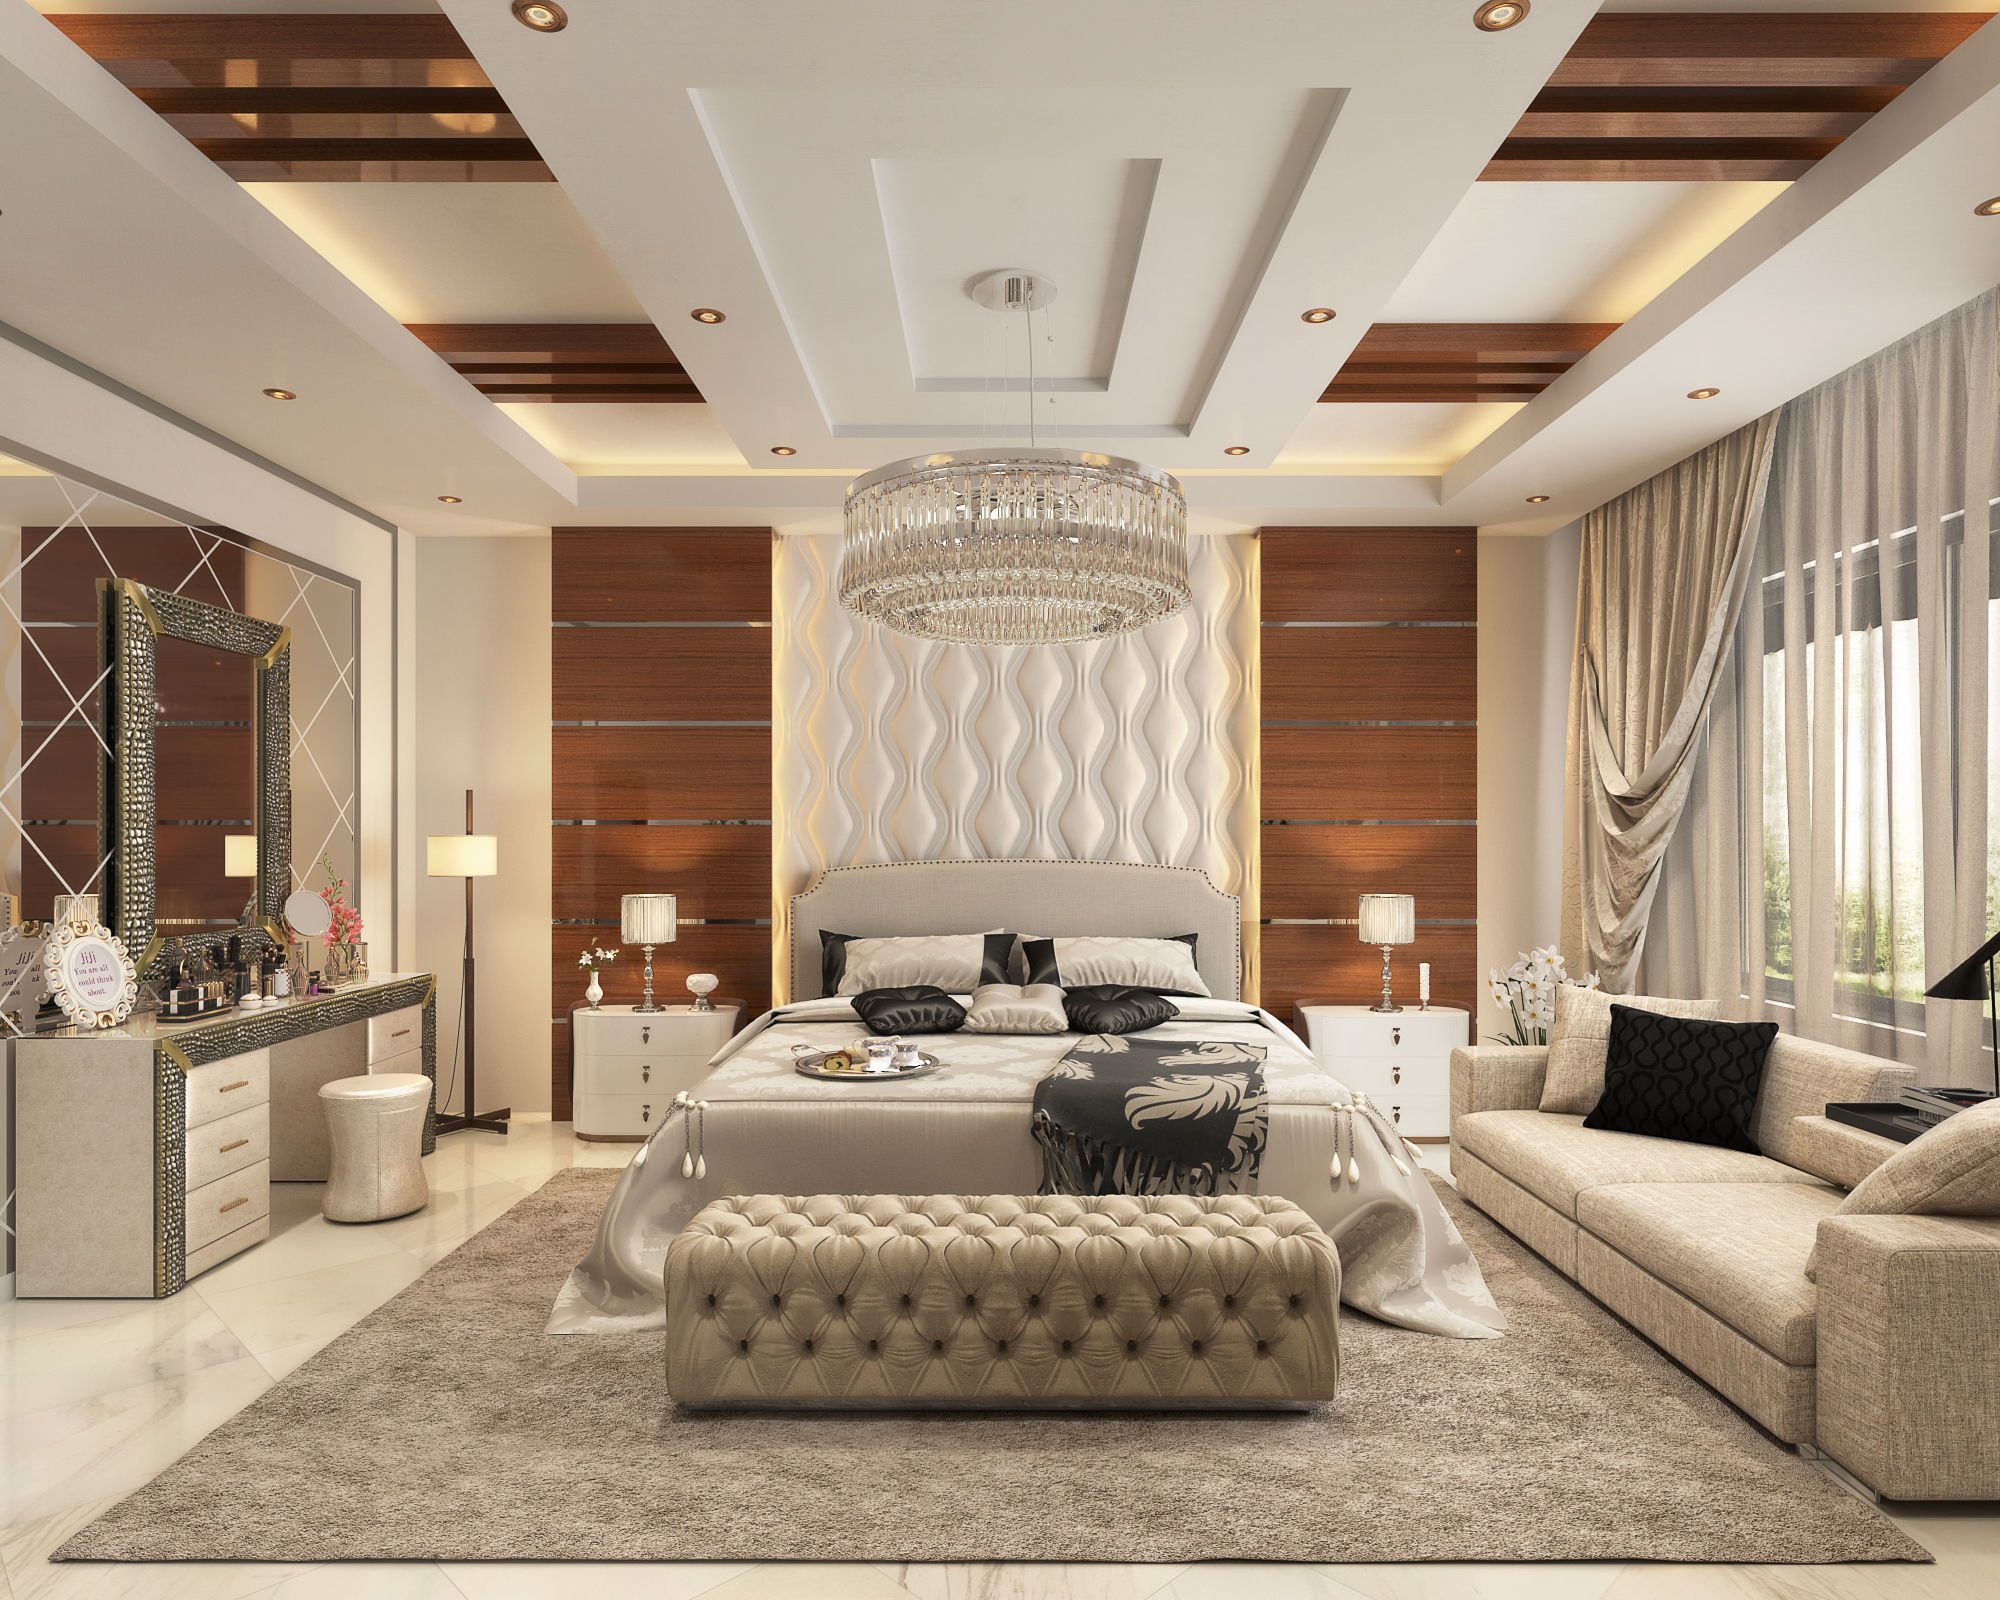 Top 15 Modern Bedroom Interior Design Ideas For 15